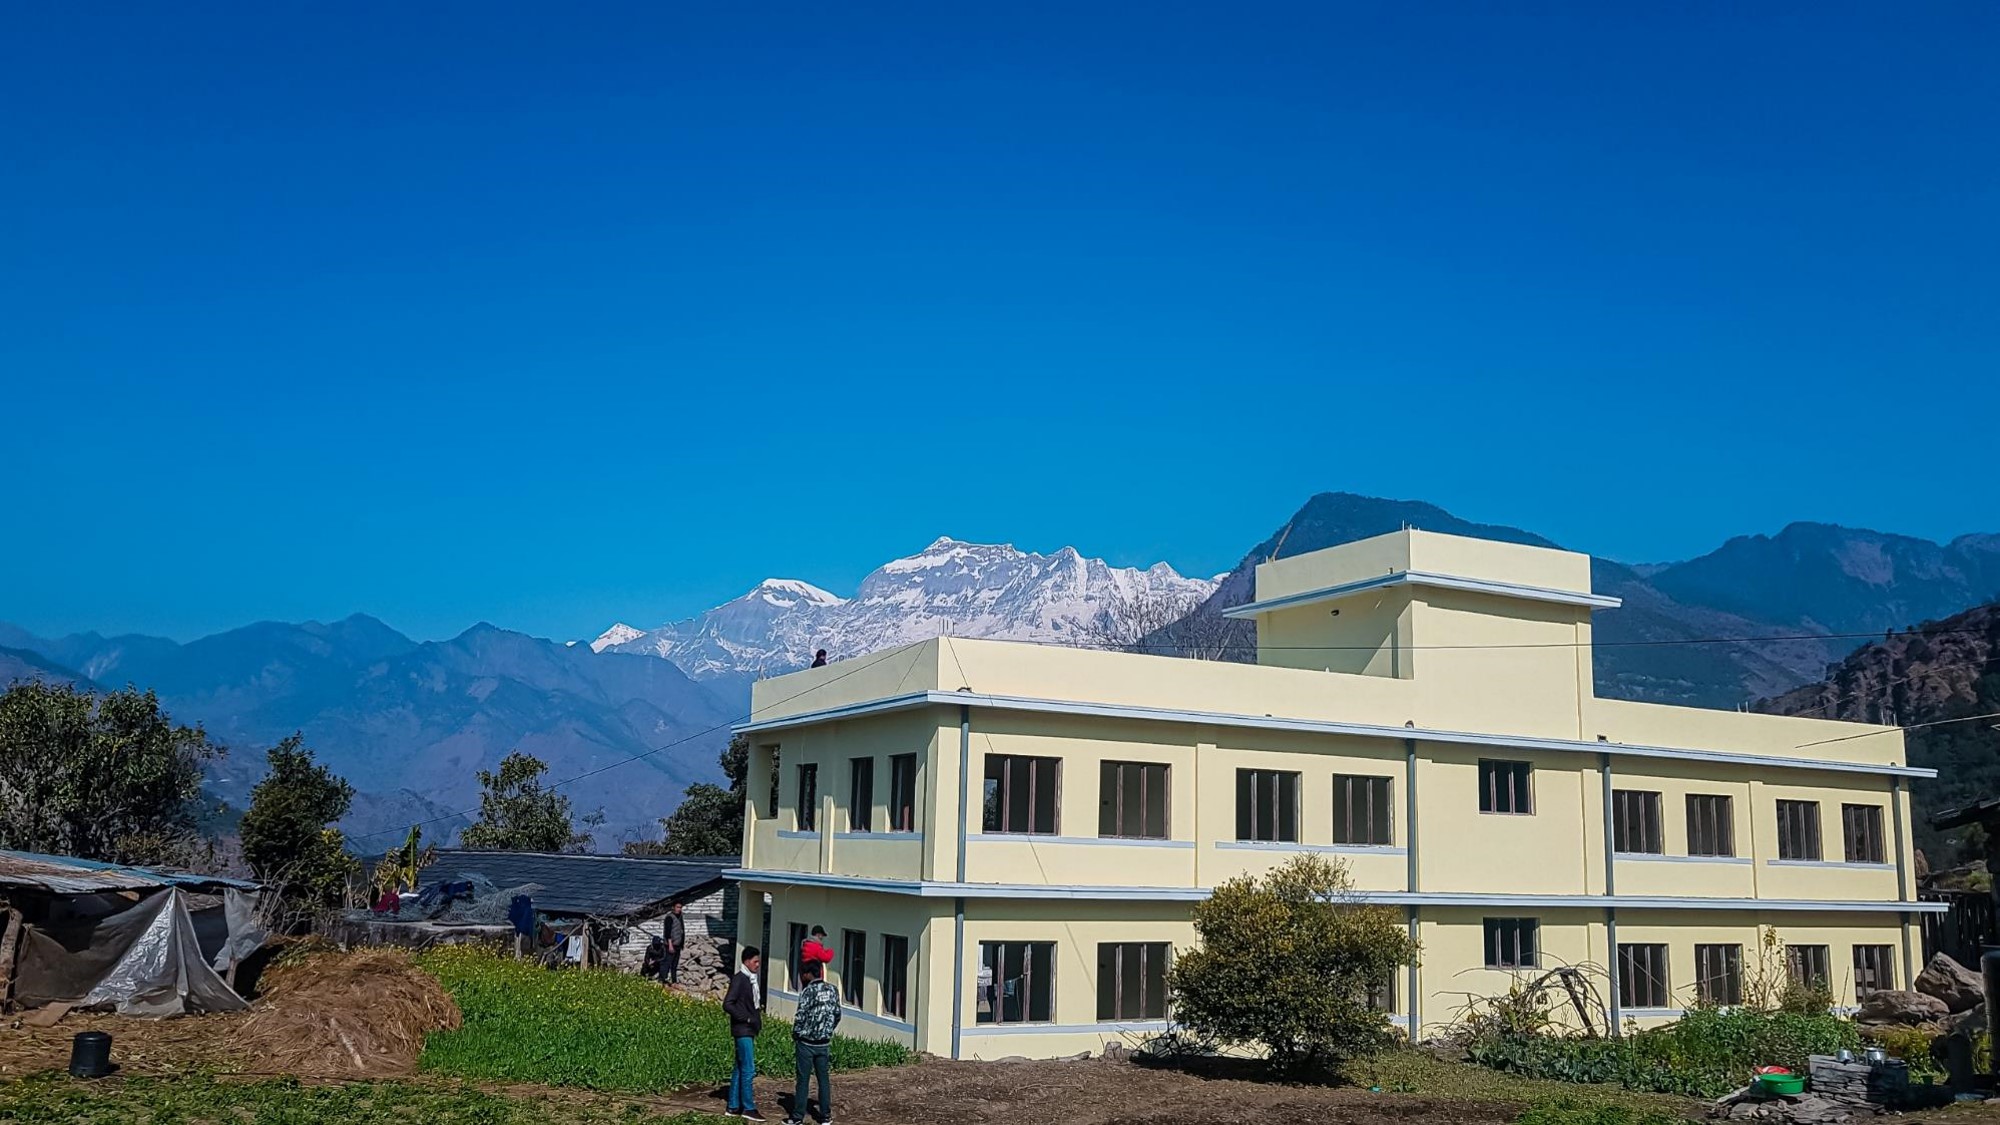 Nuova scuola in Nepal